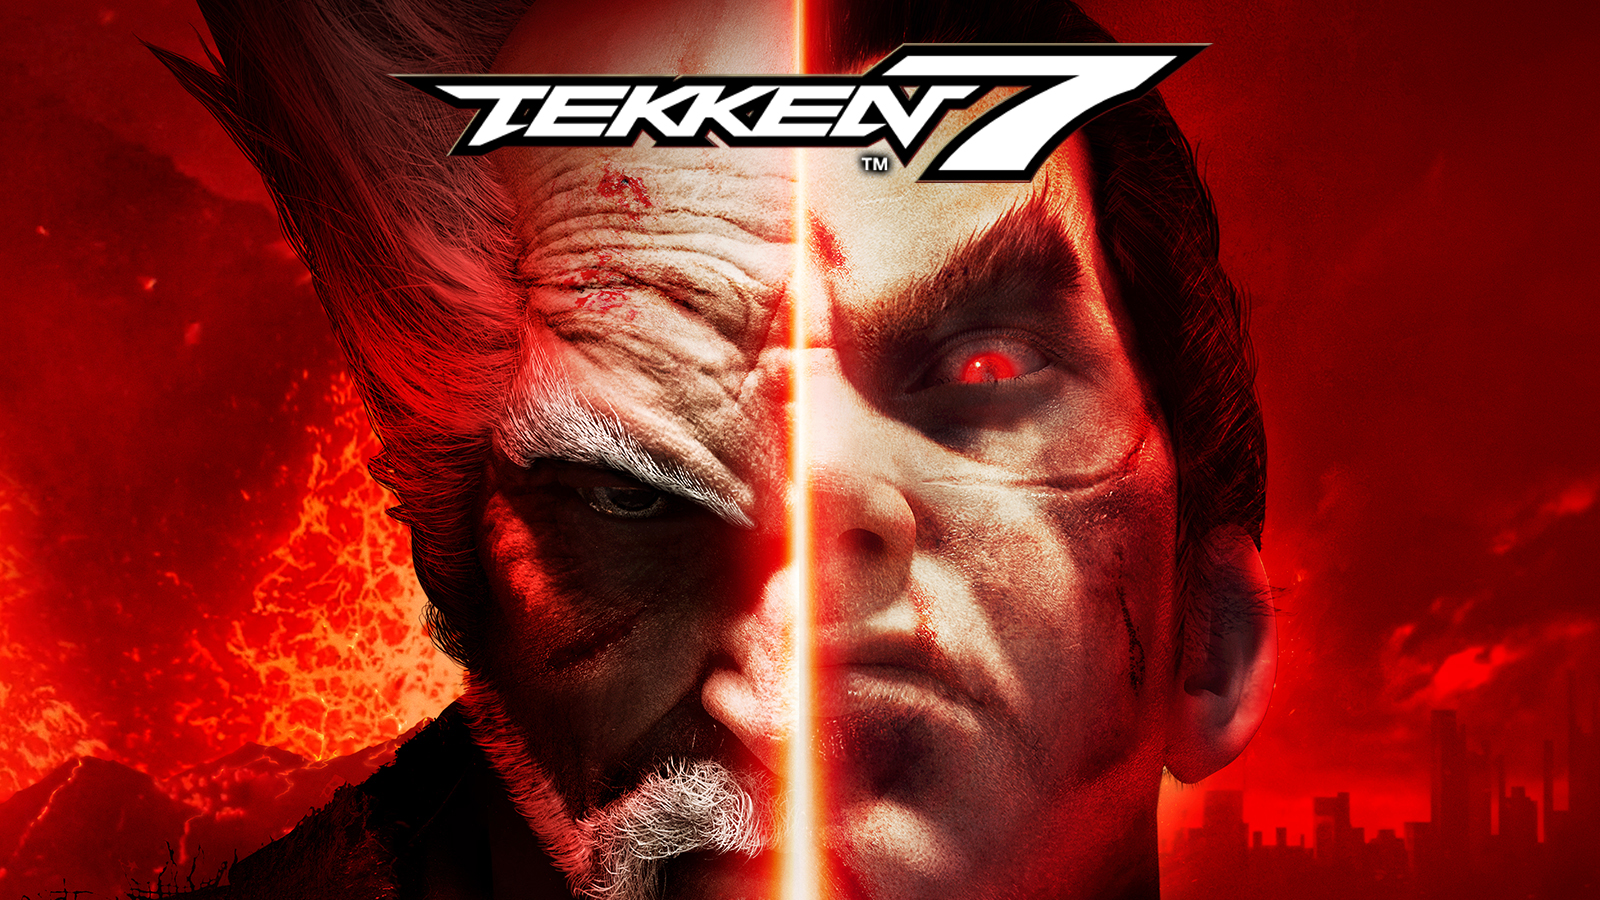 Tekken 7 Game Poster Print T656 A4 A3 A2 A1 A0|